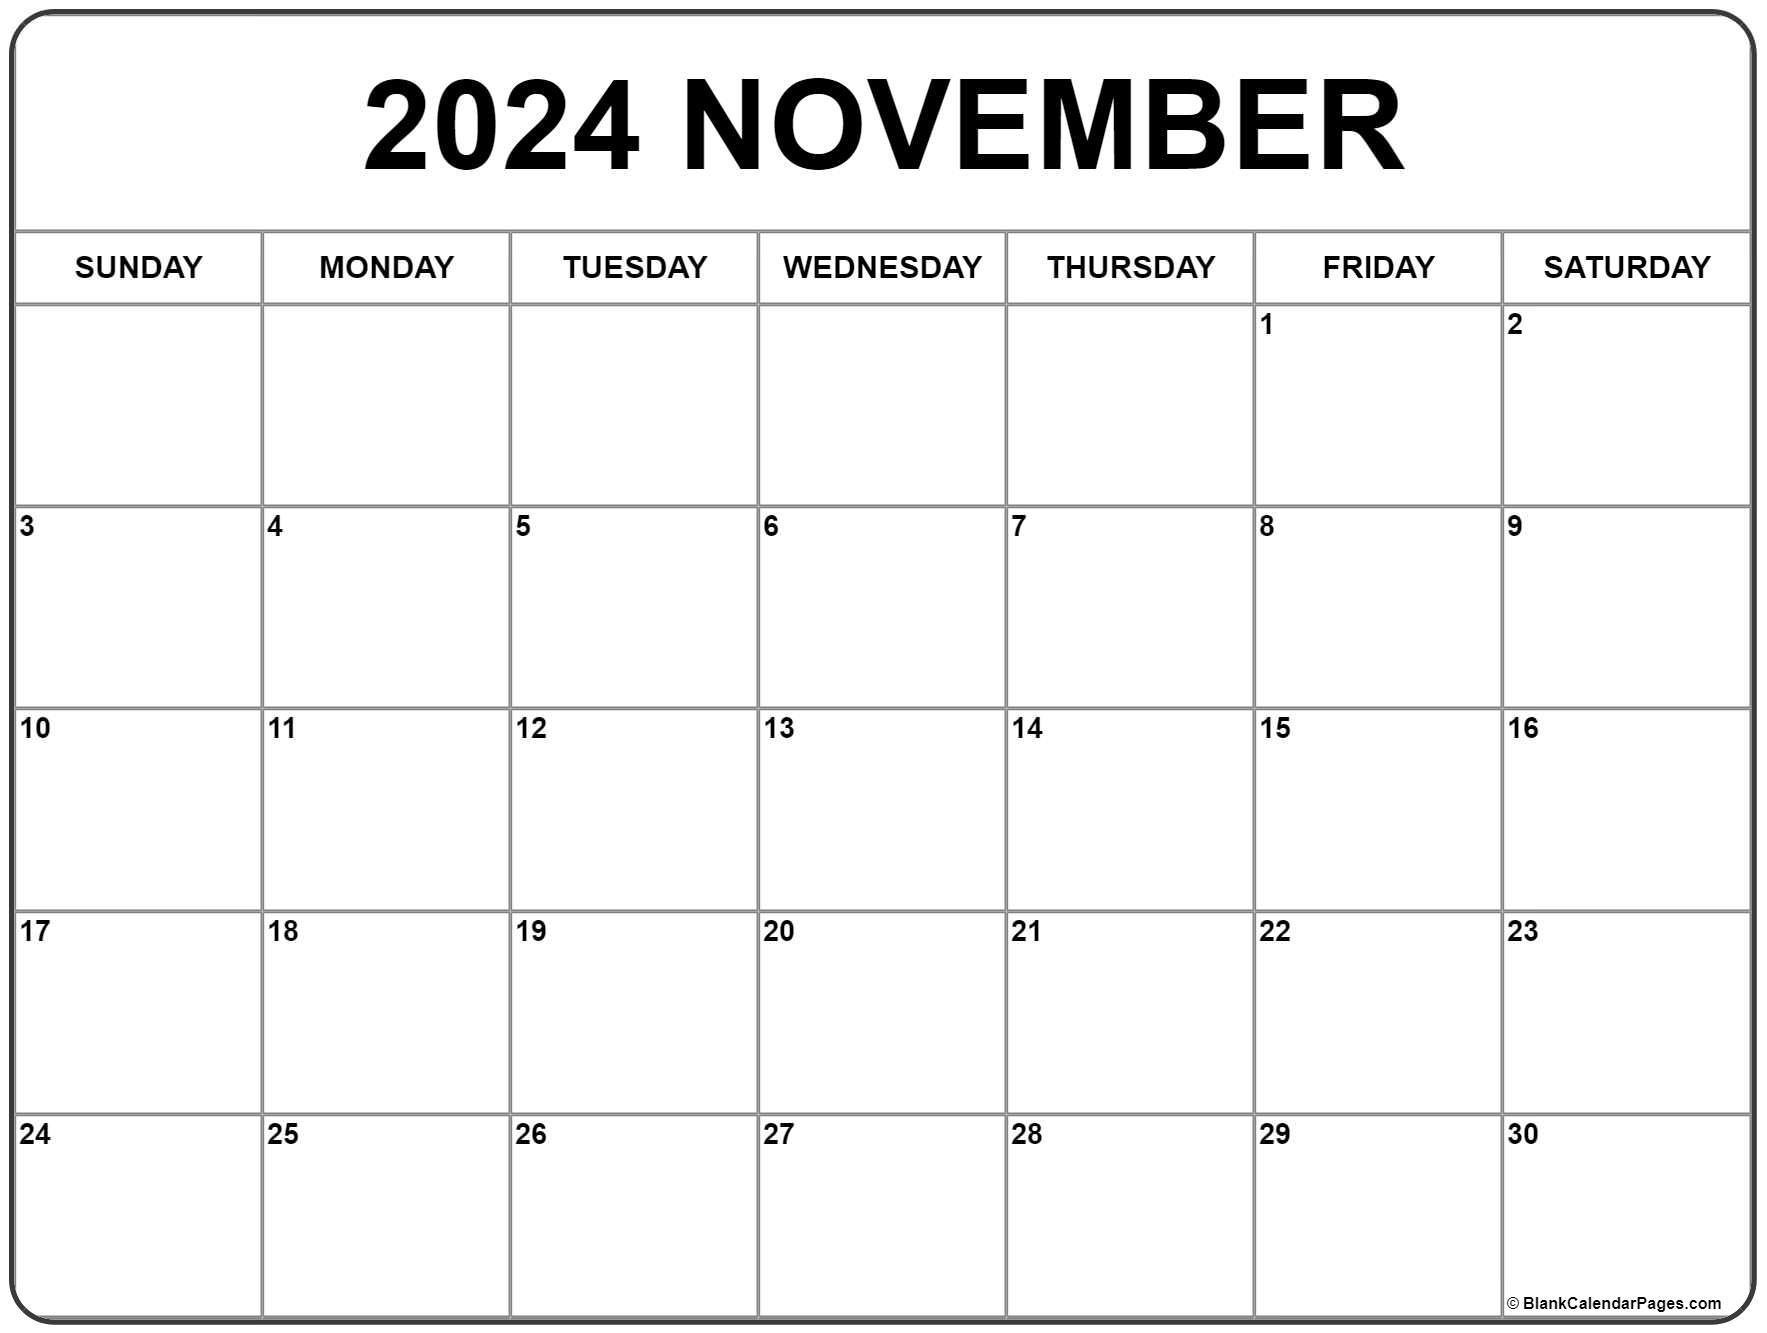 November 2024 Calendar | Free Printable Calendar regarding Free Printable Blank Calendar November 2024